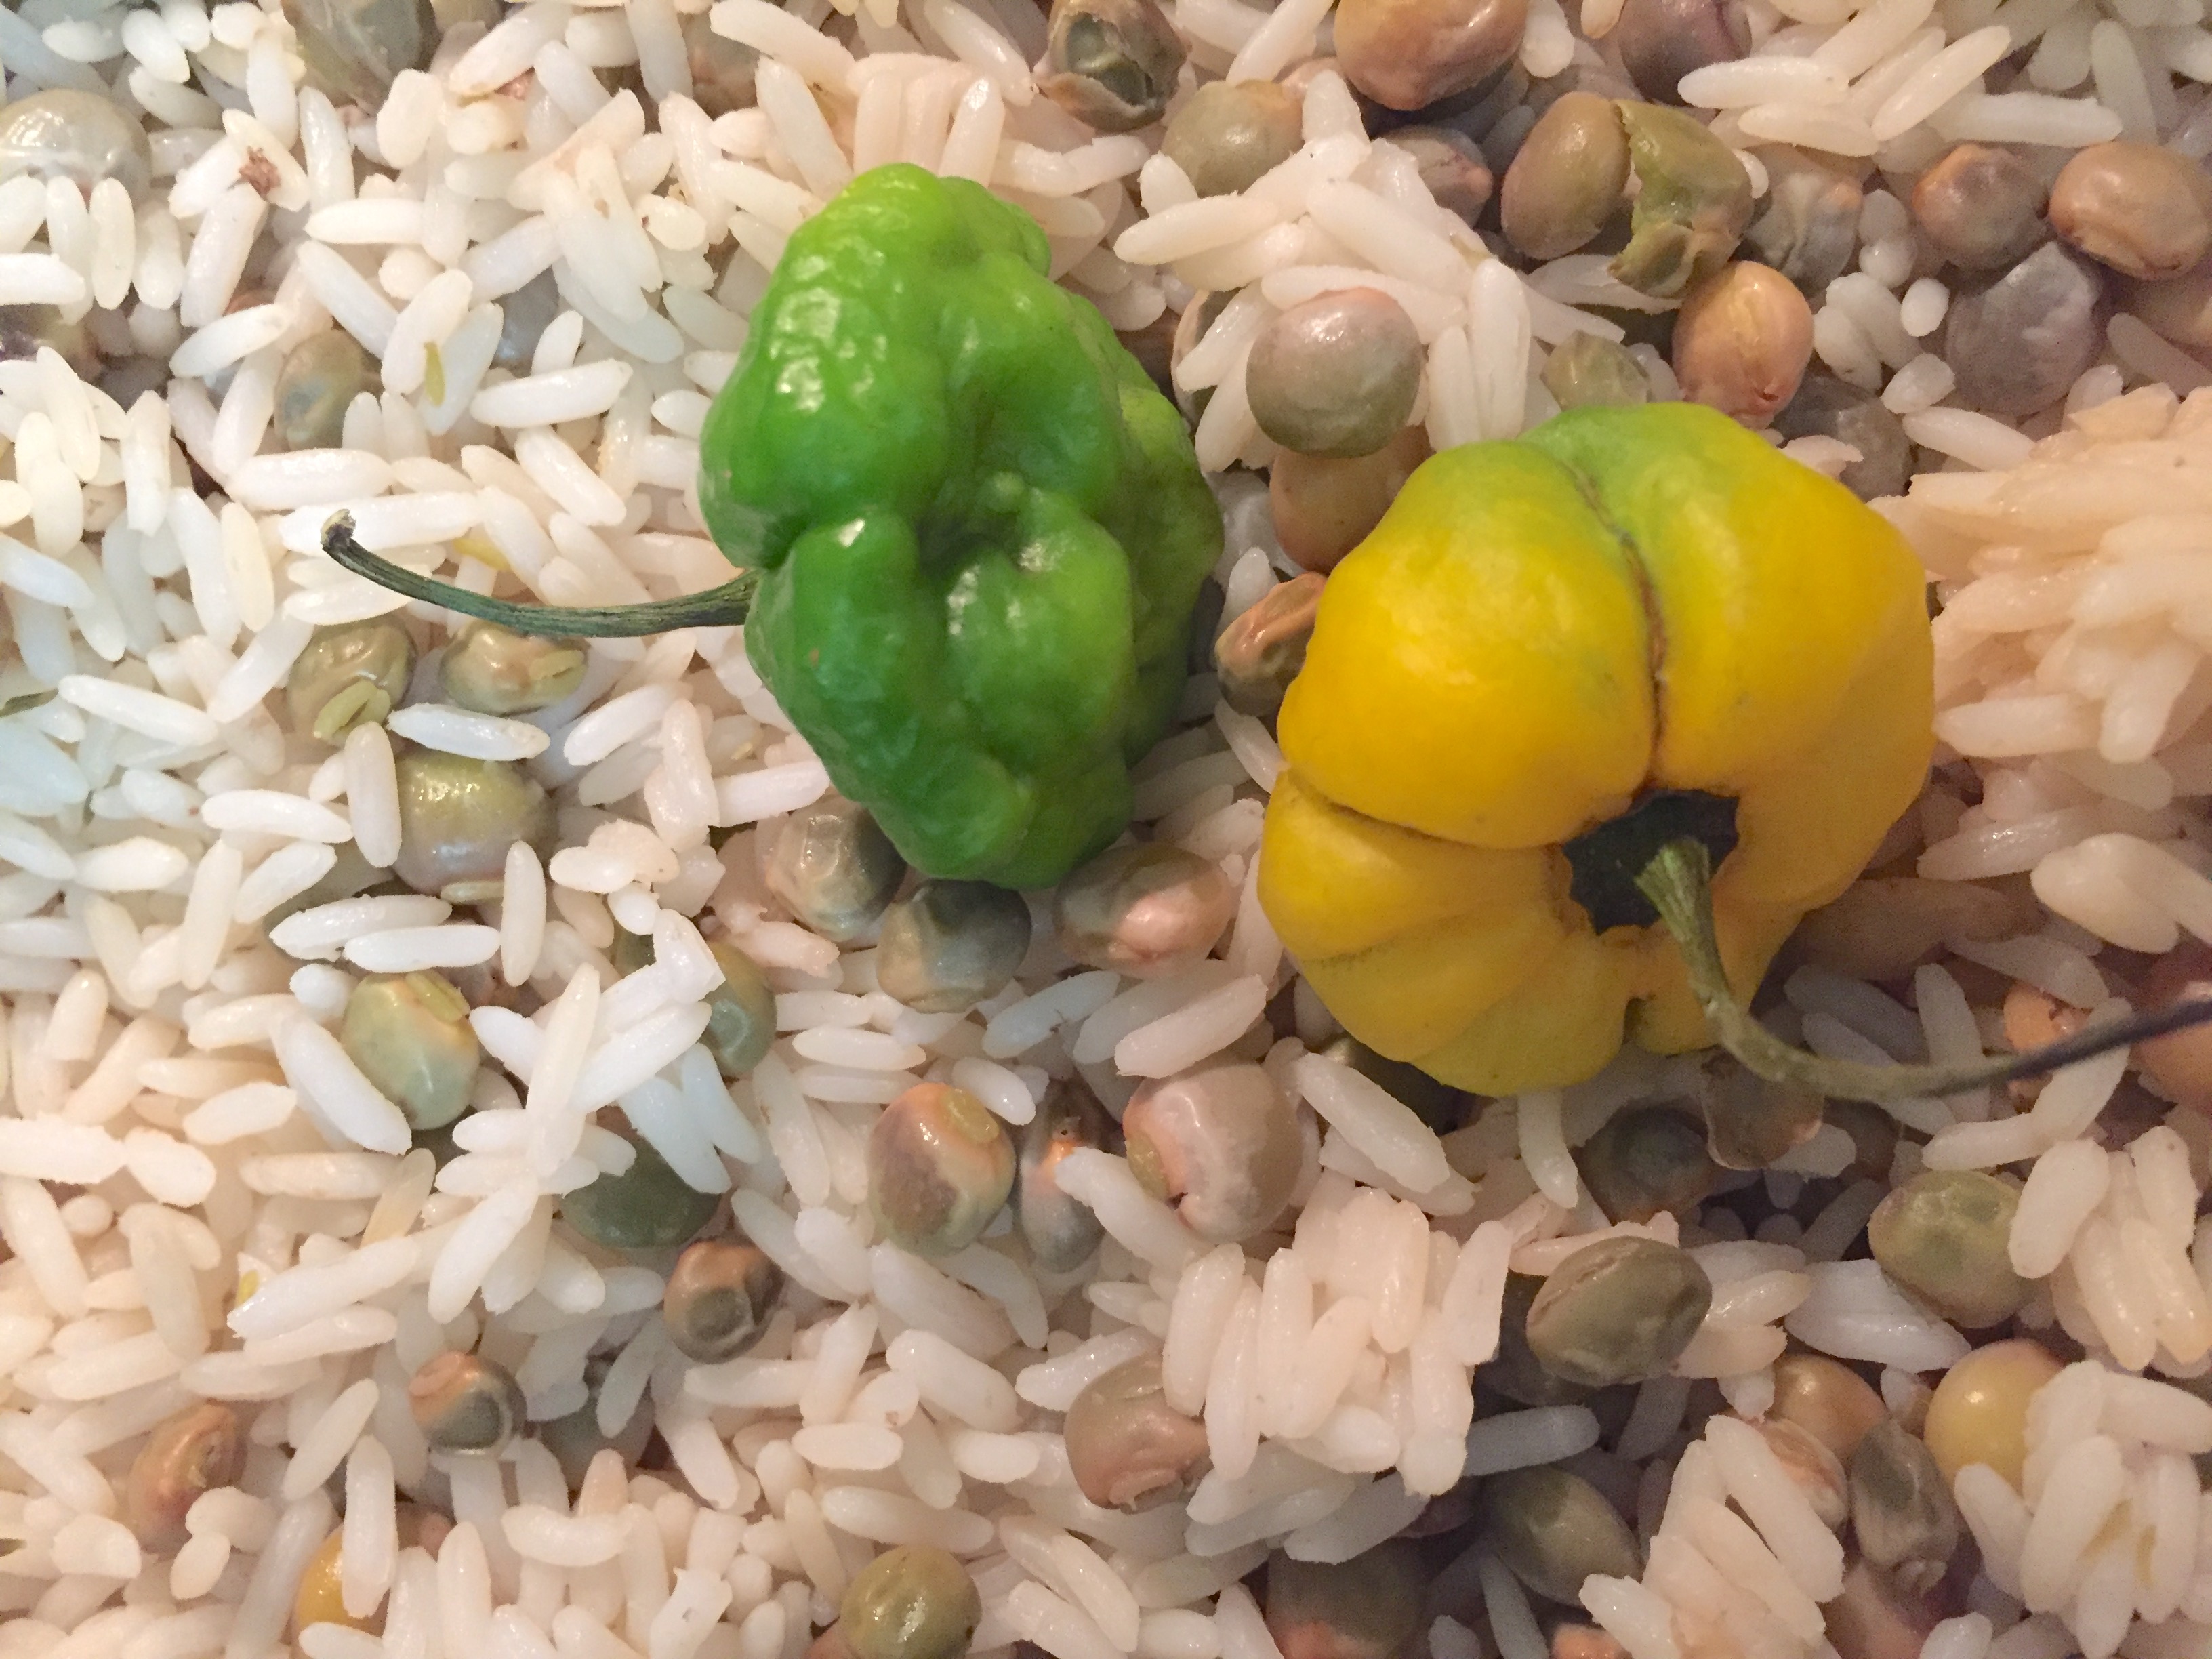 Rice and Gungo Peas